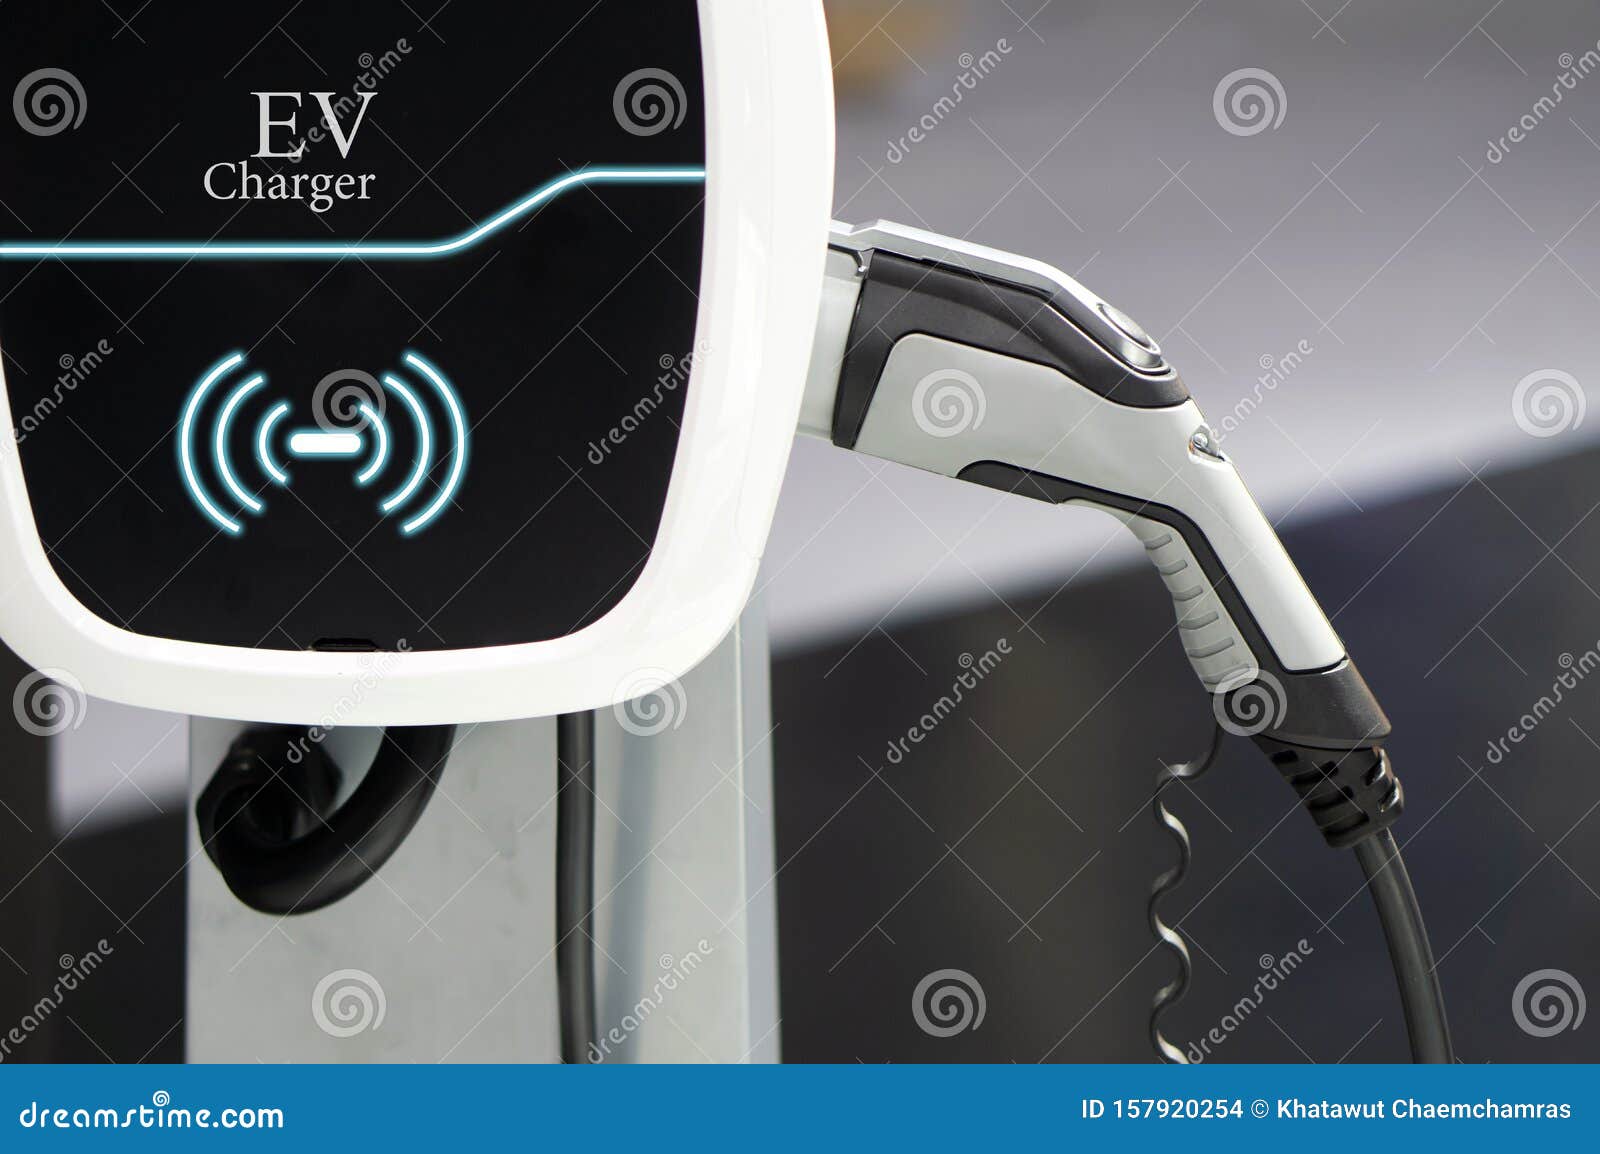 ev fuel plug charger technology for electric hybrid car